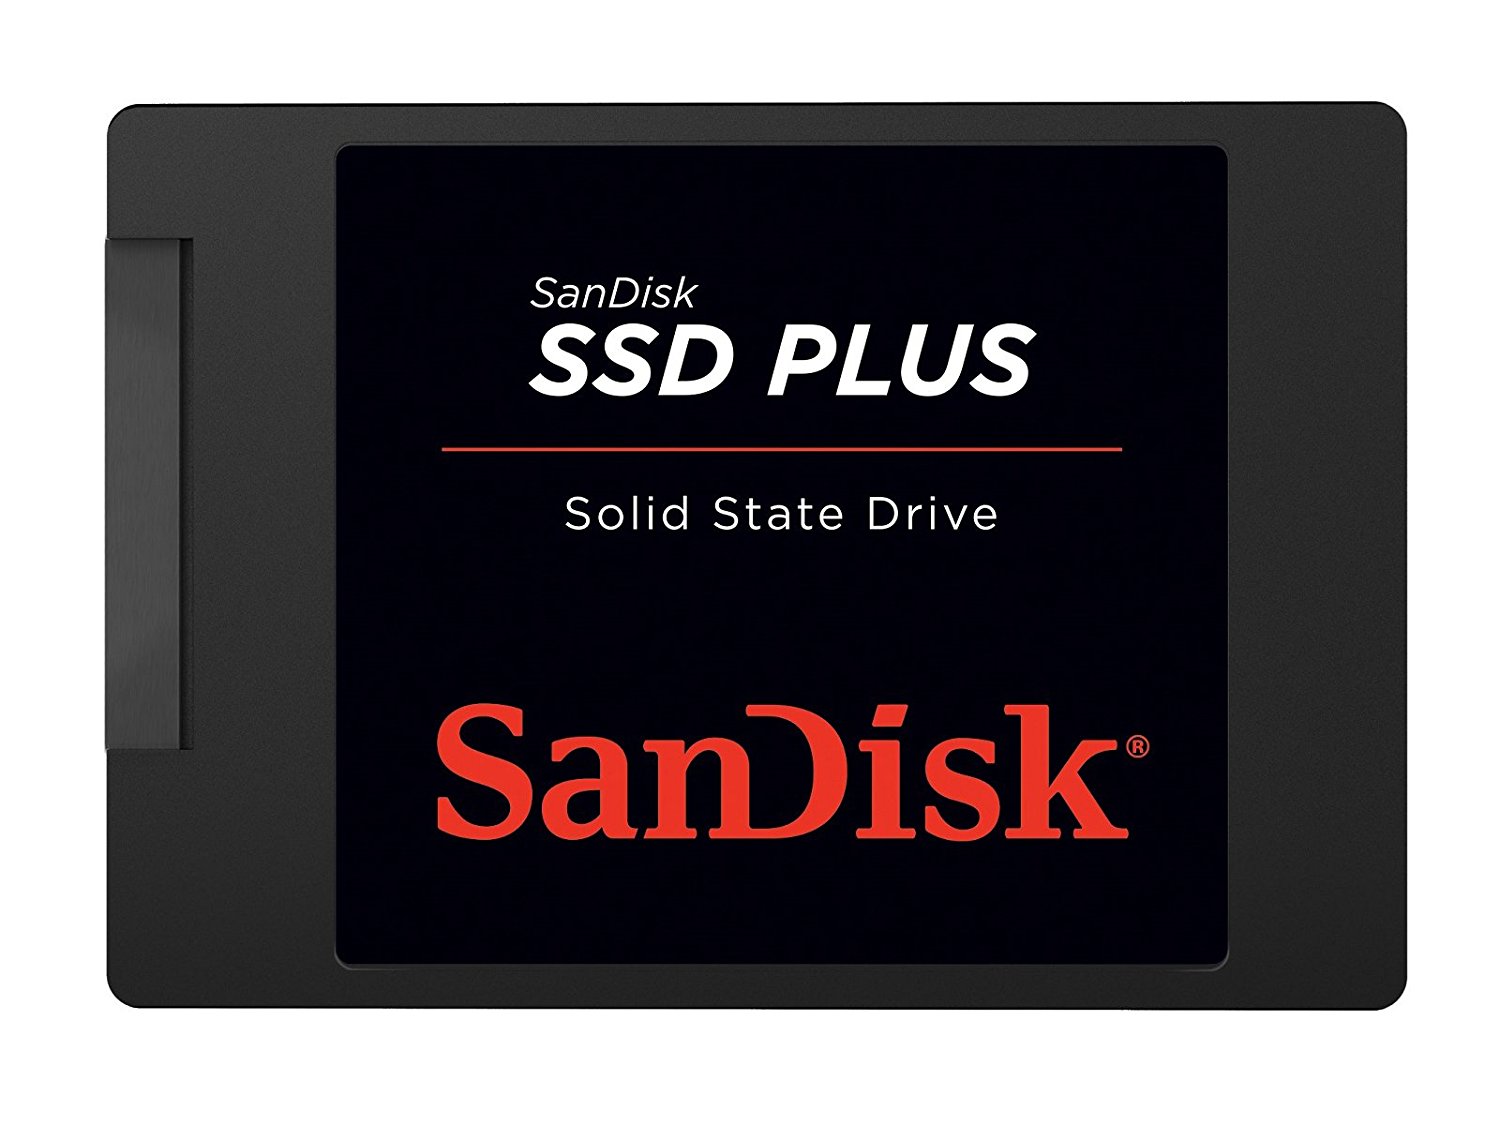 SanDisk SSD Plus 120GB SSDA-120G-G26 product image